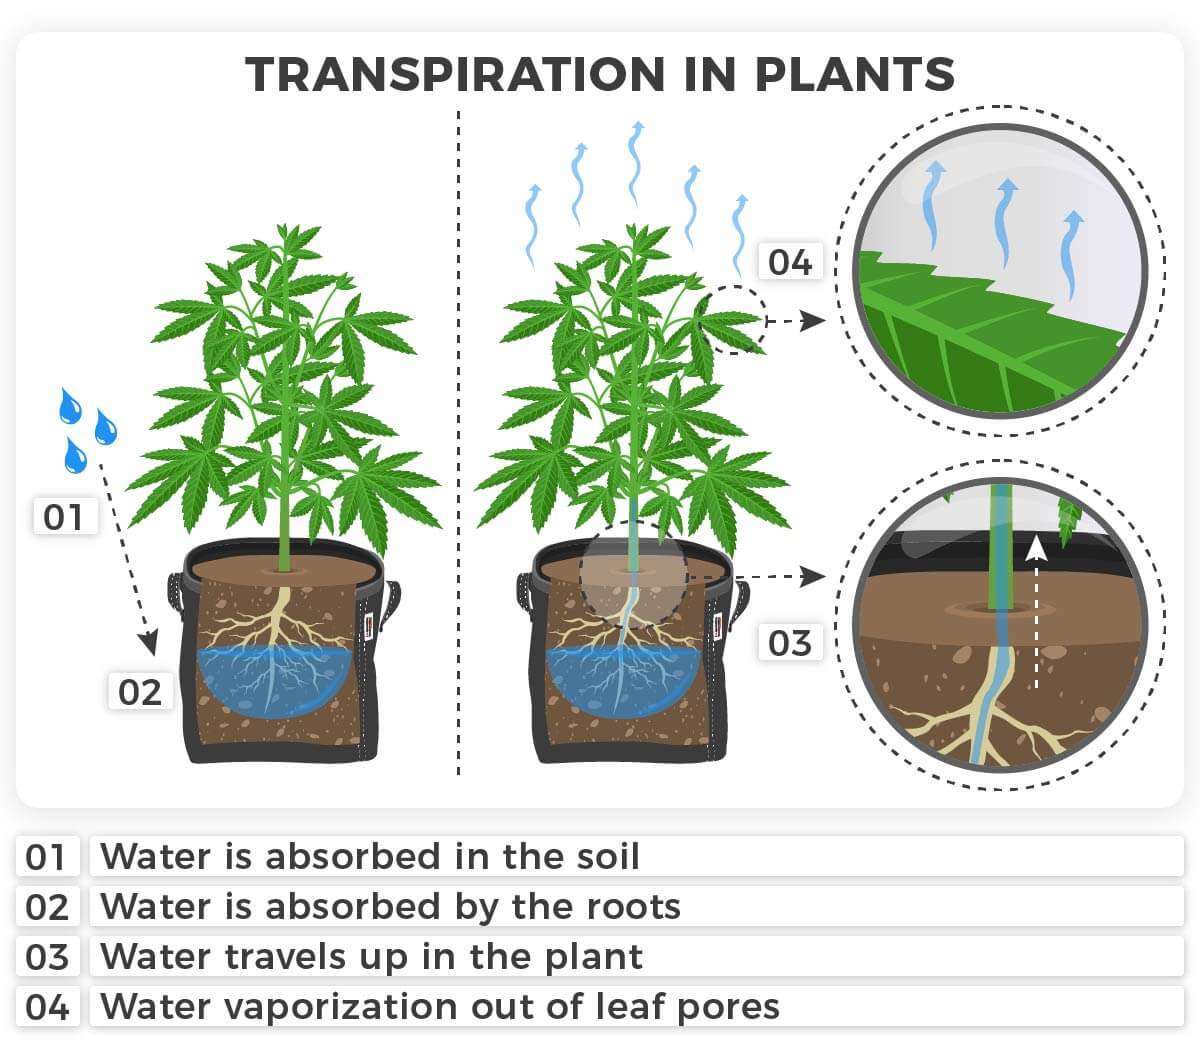 Depiction of plant transpiration process